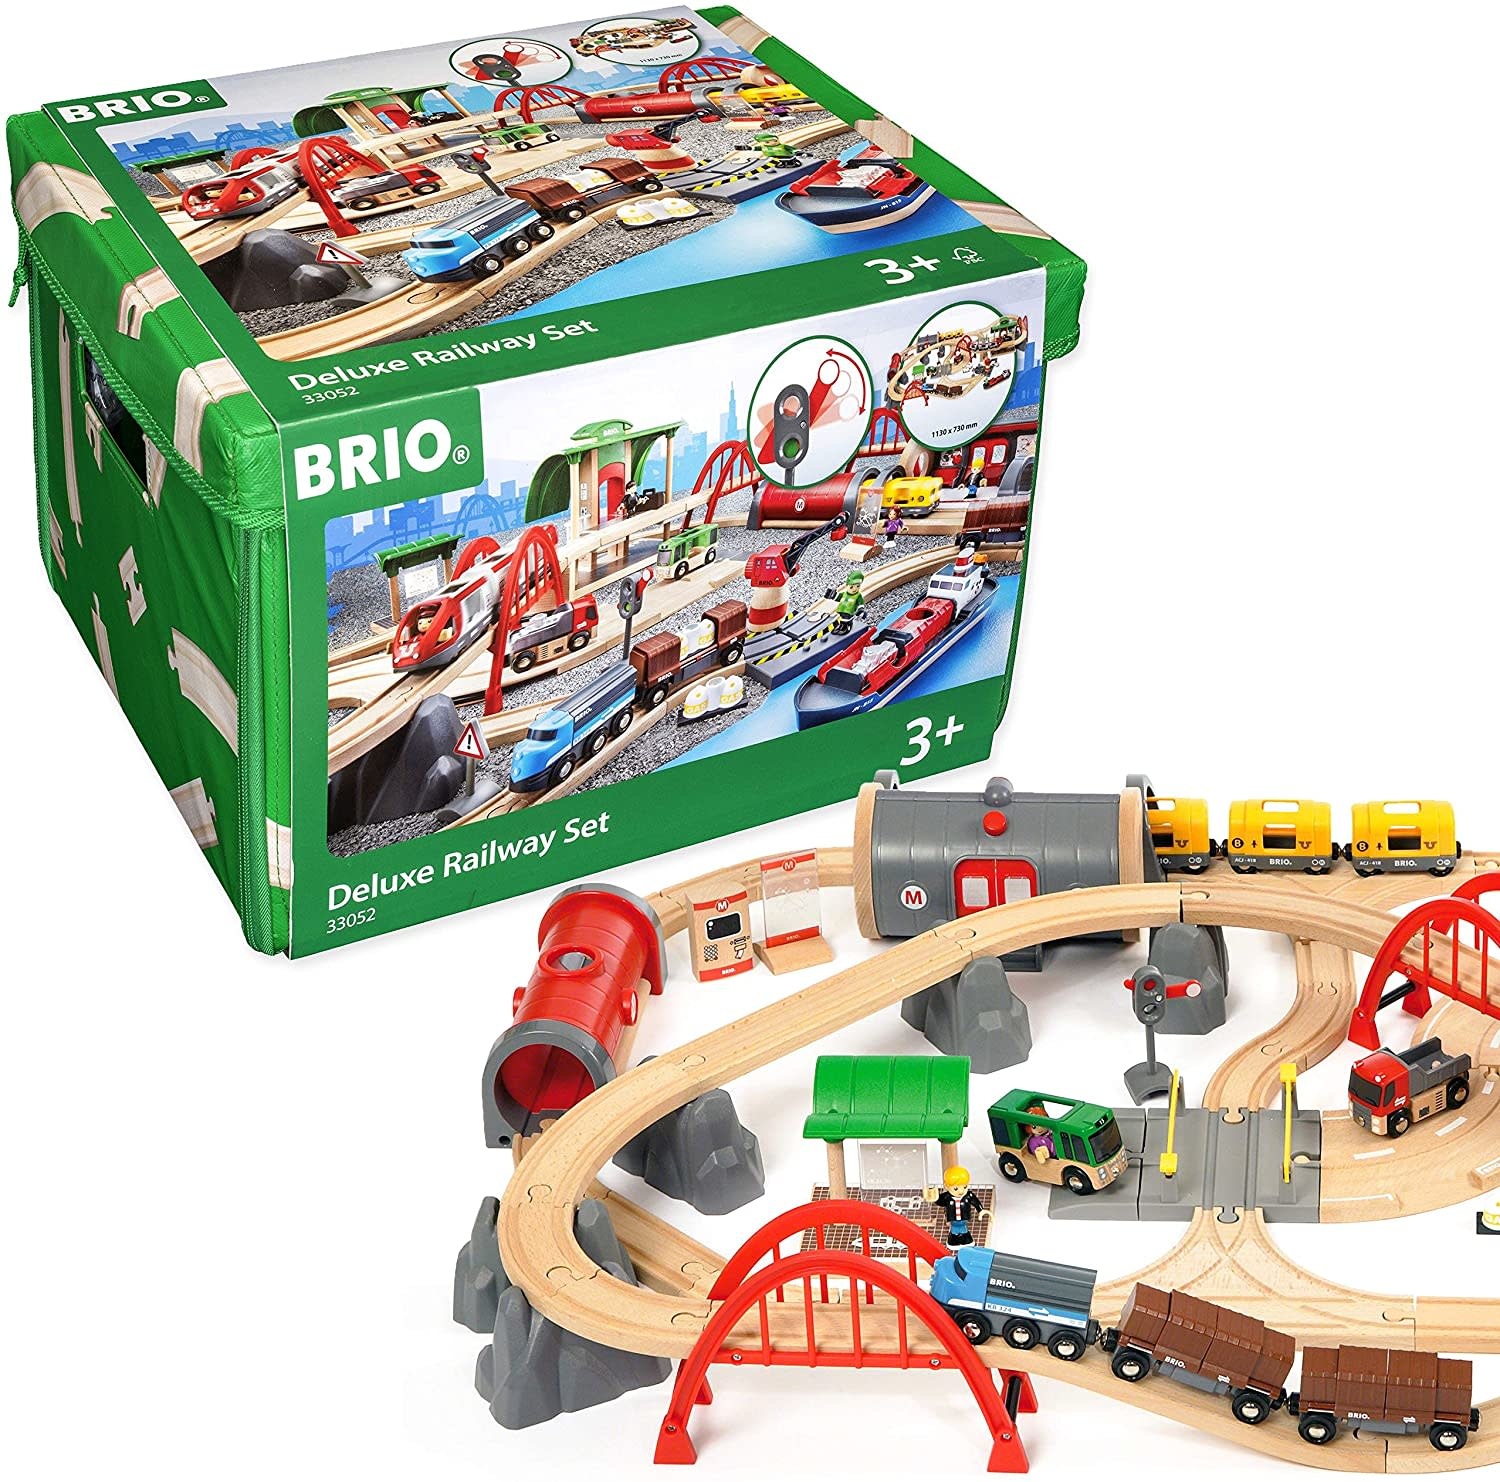 BRIO Deluxe Railway Set Train Set 